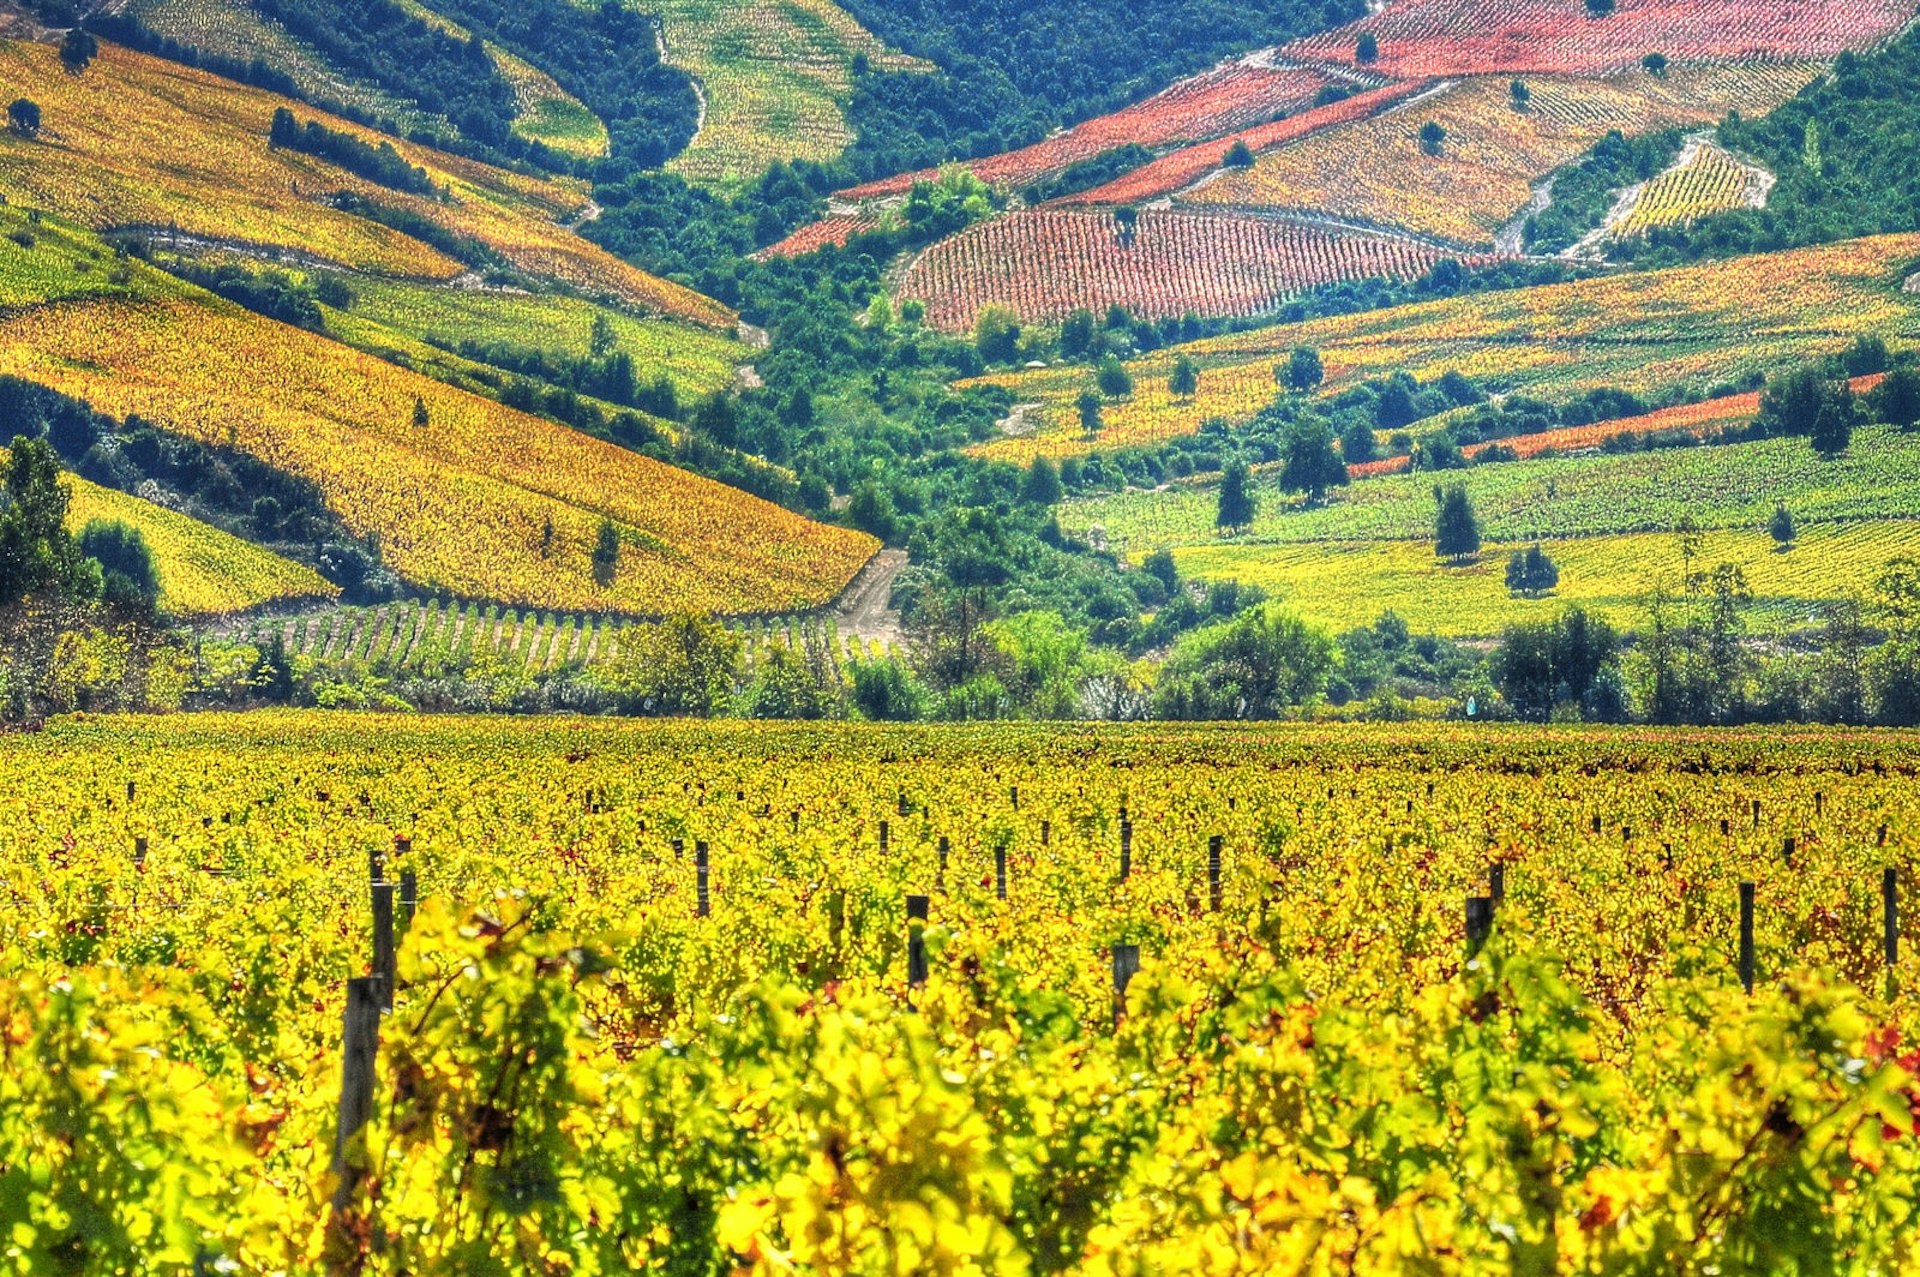 The patchwork vineyards of Montgras Winery, Santa Cruz, Chile © Fotografías Jorge León Cabello / Getty Images